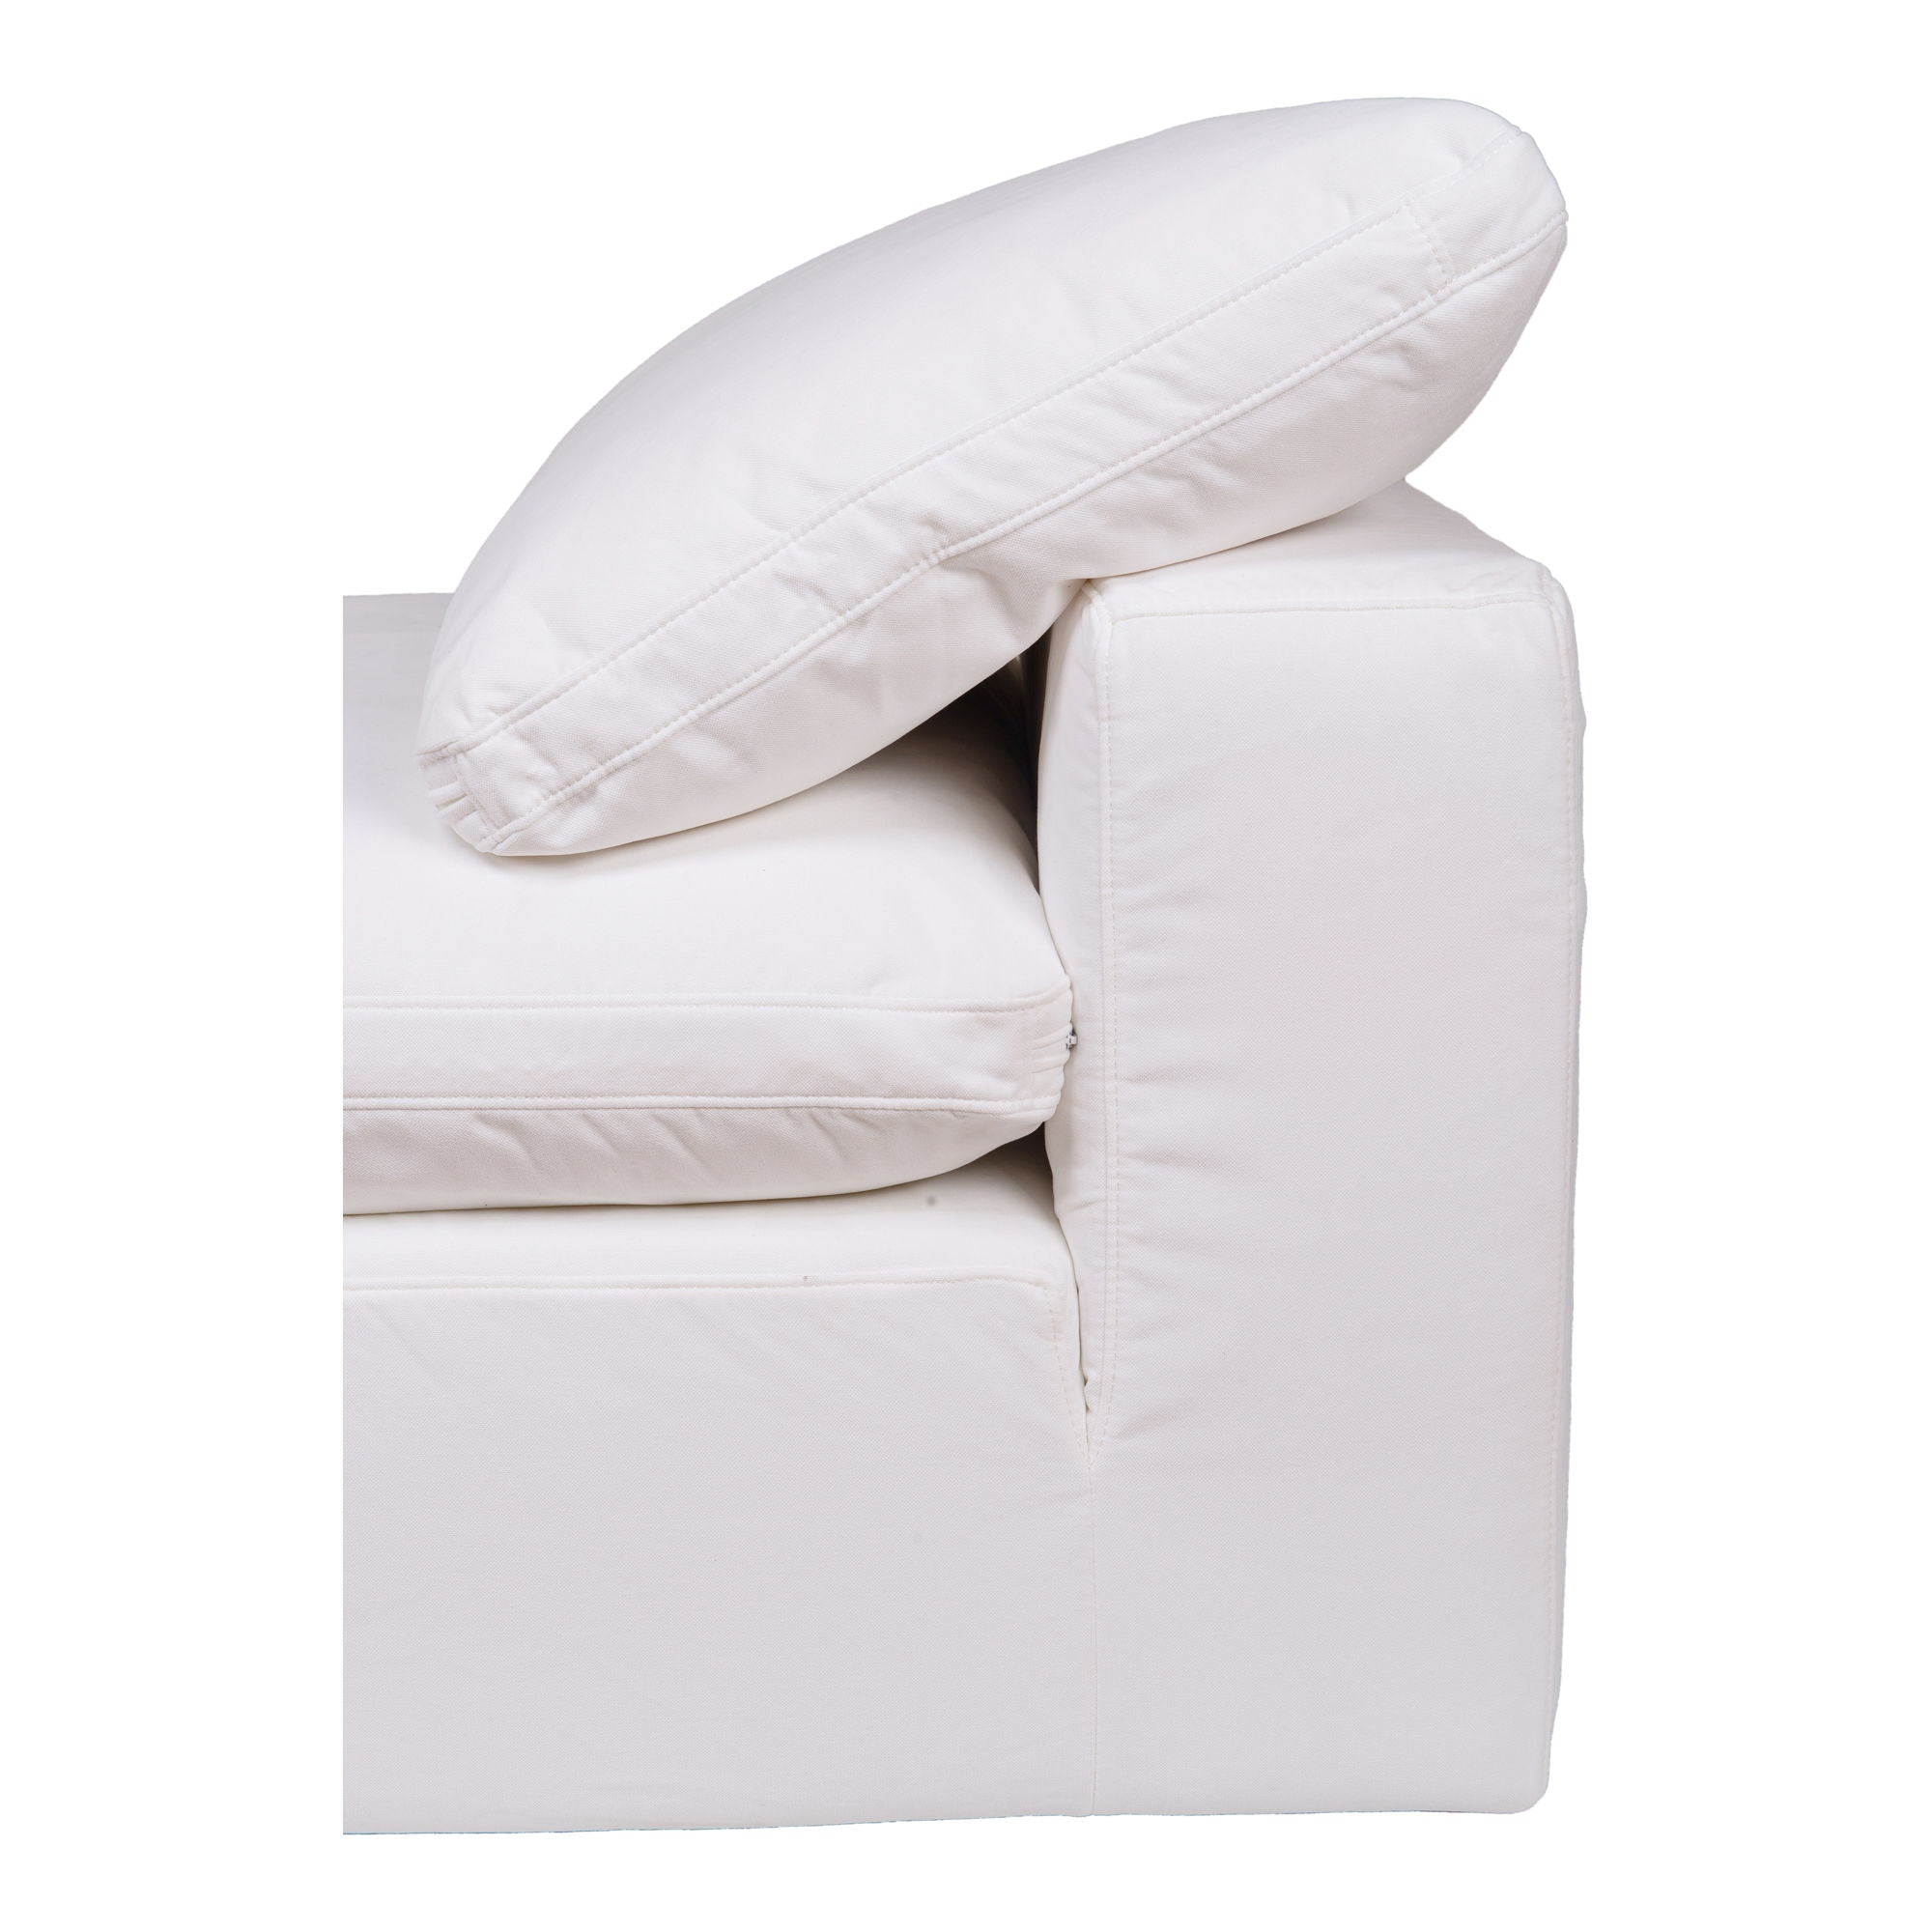 Clay - Slipper Chair Livesmart Fabric - Cream